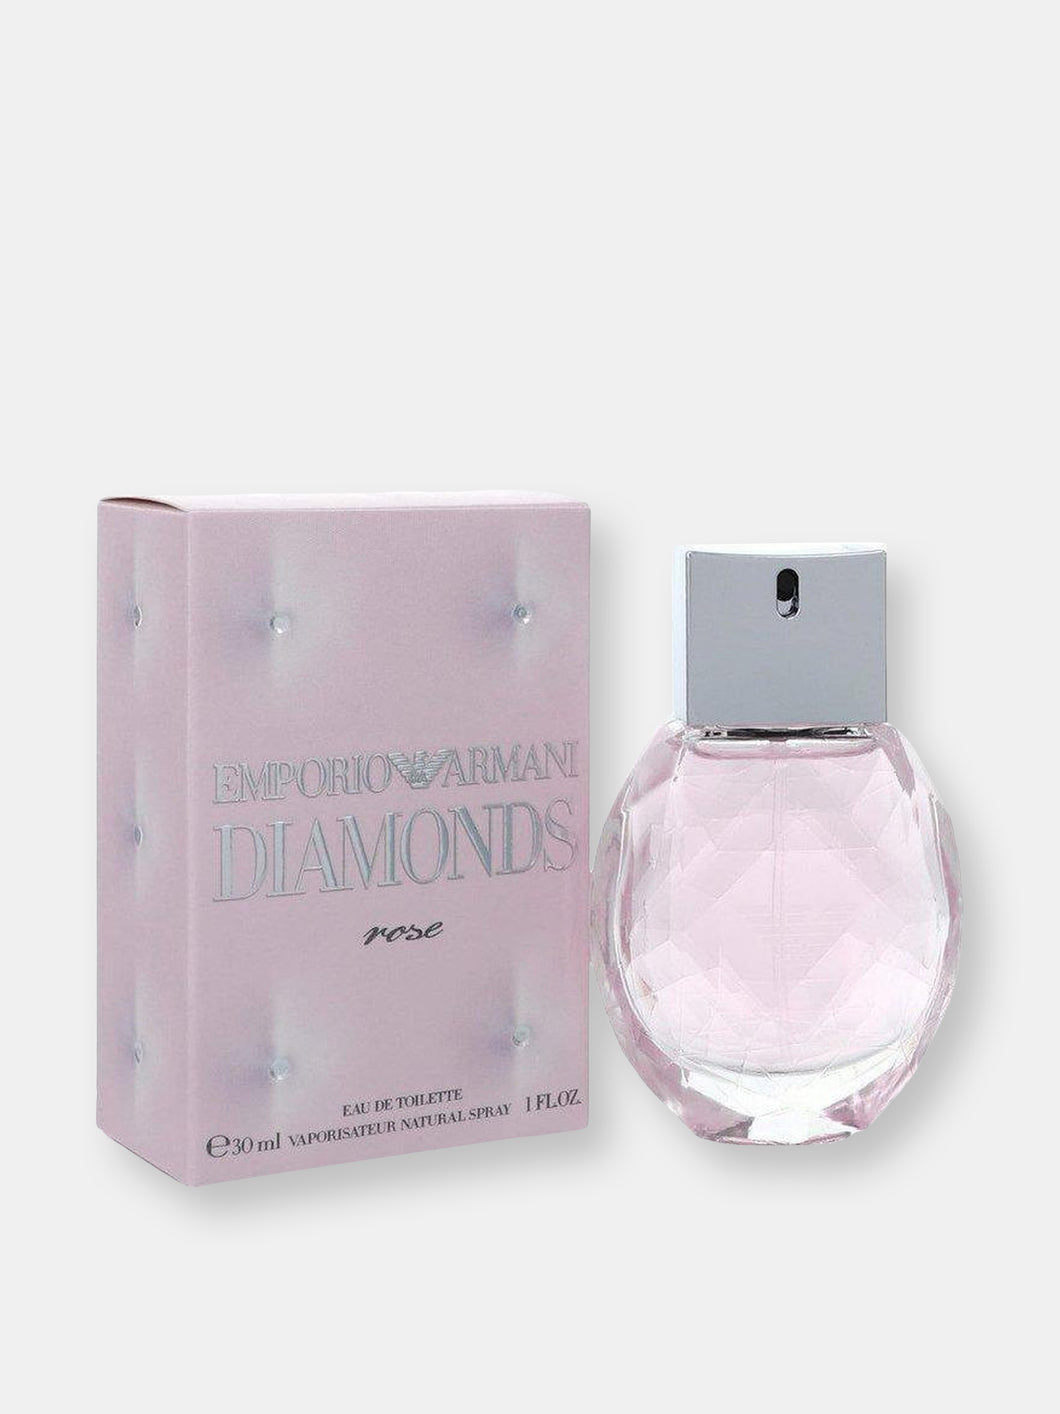 Emporio Armani Diamonds Rose by Giorgio Armani Eau De Toilette Spray 1 oz